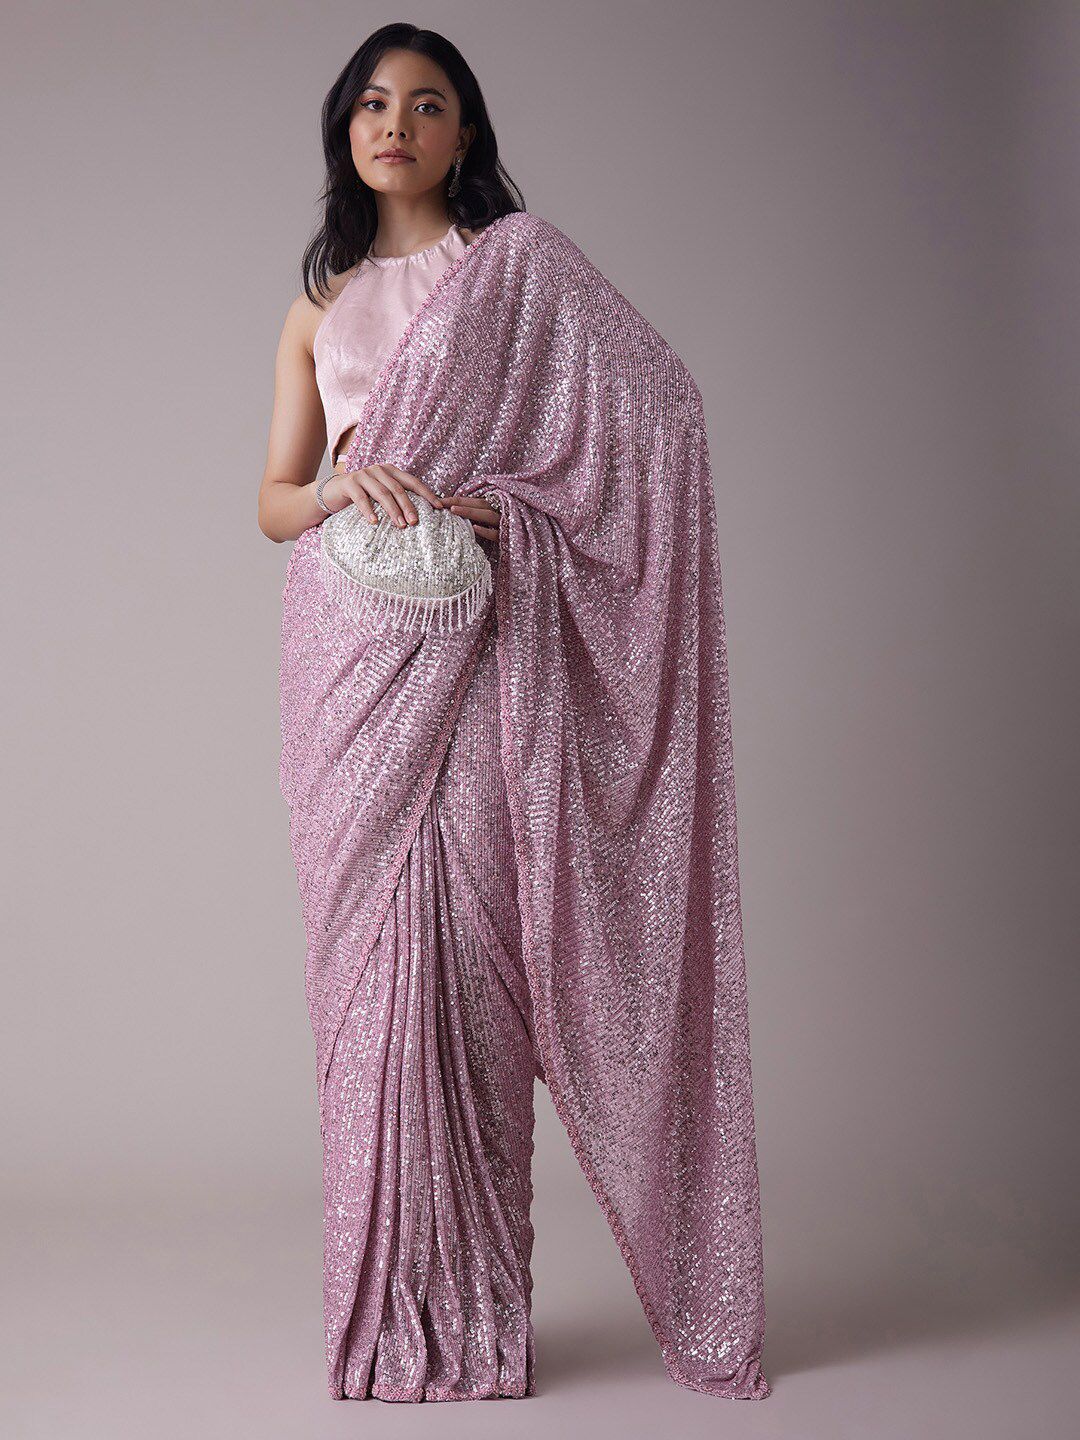 KALKI Fashion Embellished Beads & Stones Net Saree Price in India